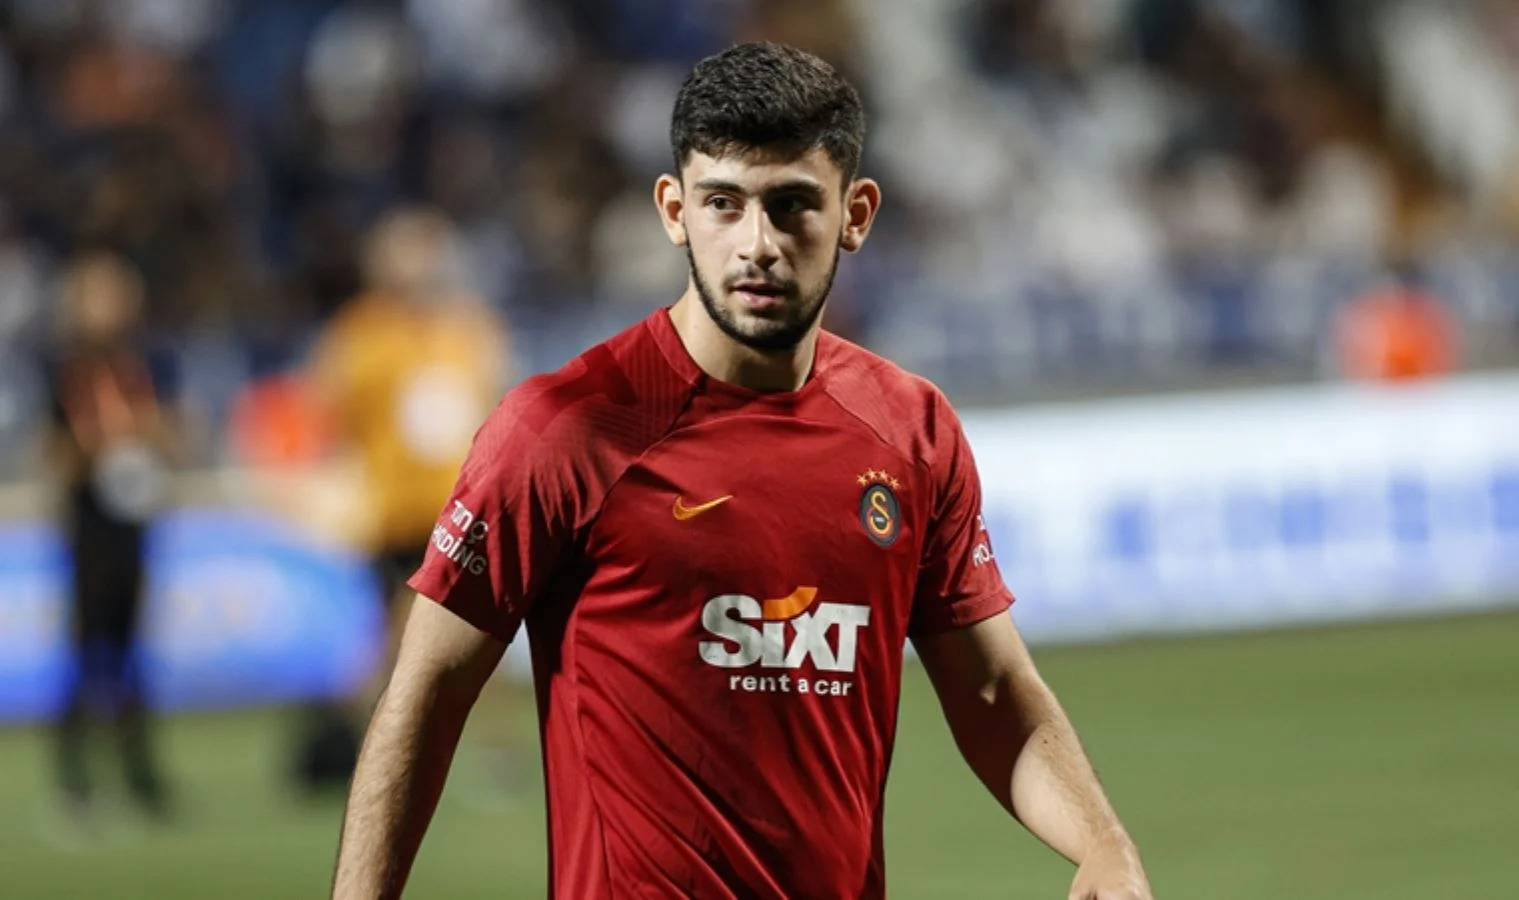 Galatasaray'da Yusuf Demir forma bekliyor